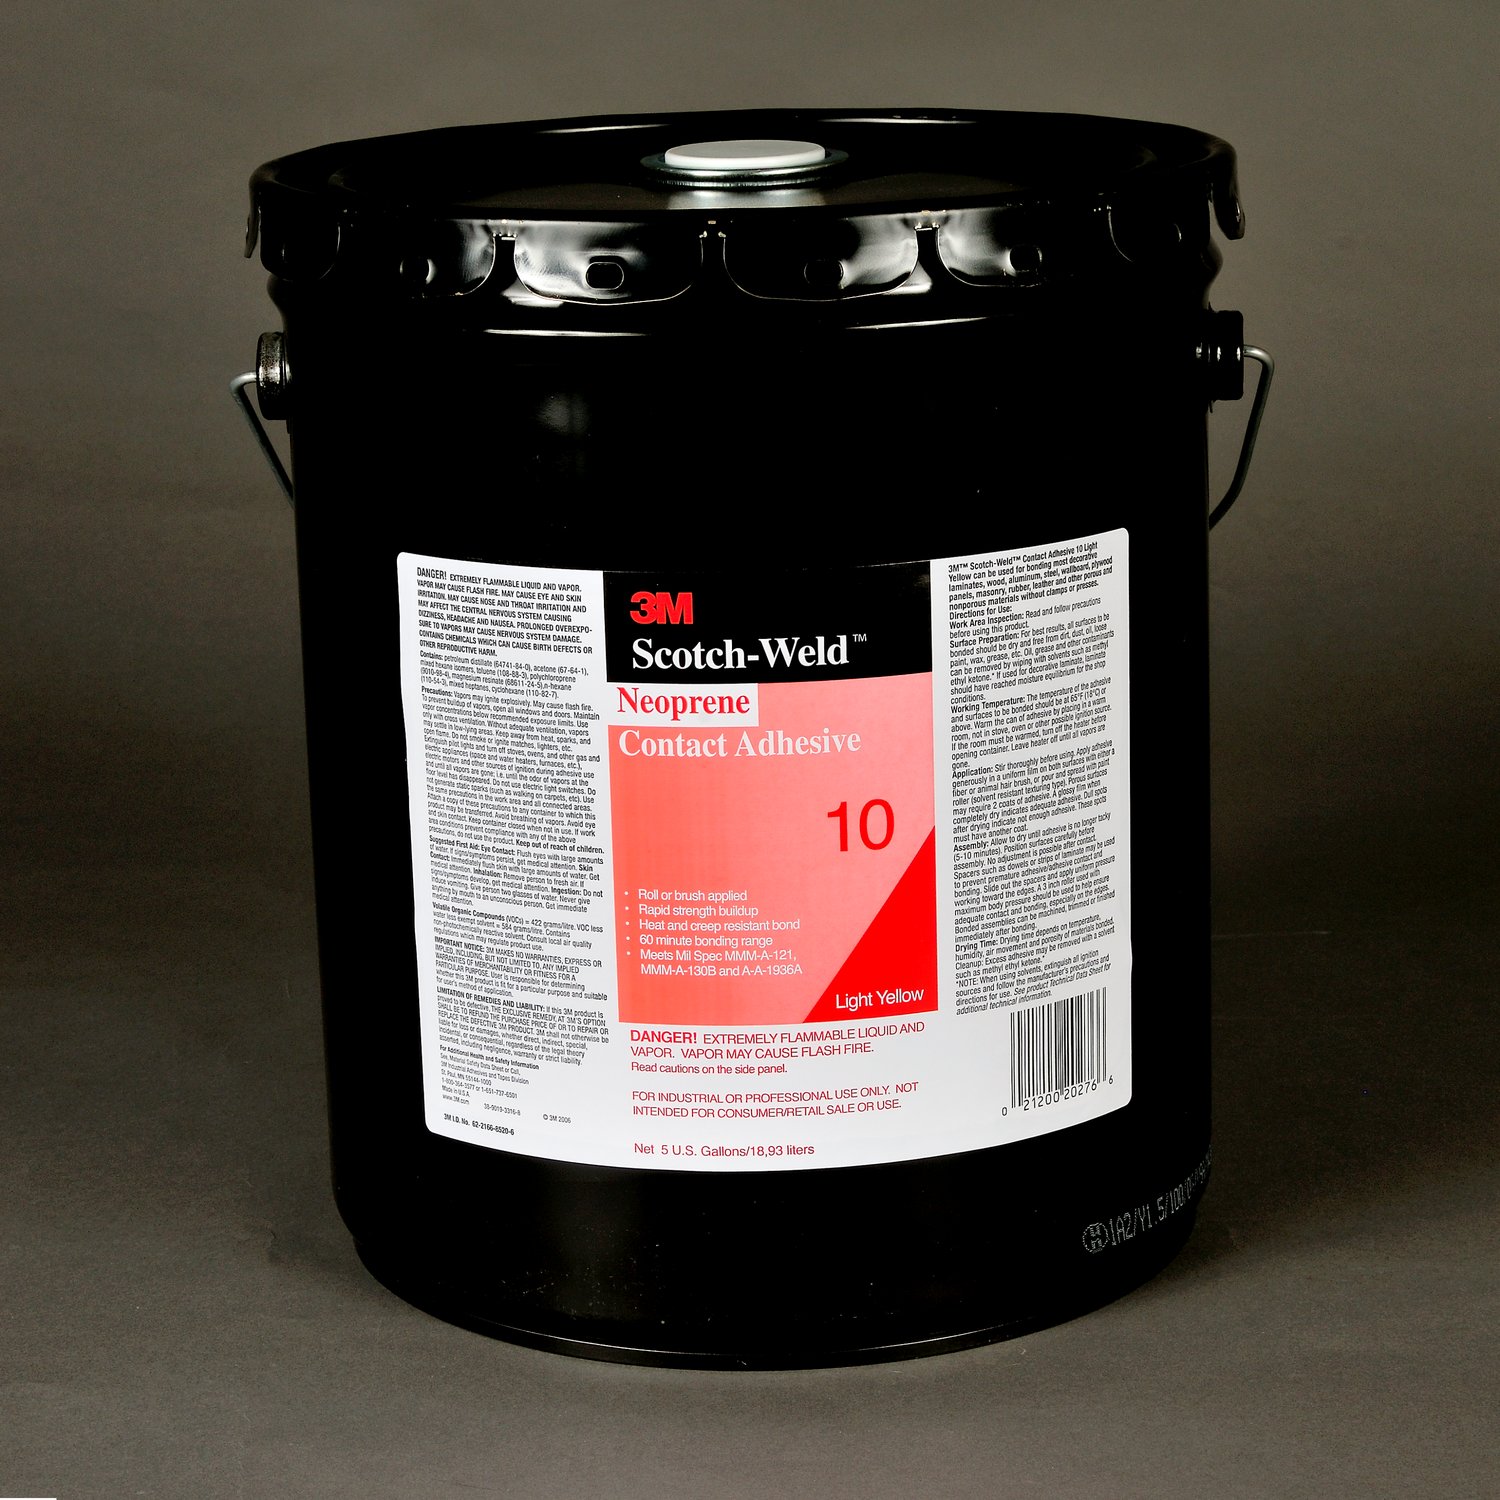 7000121218 - 3M Neoprene Contact Adhesive 10, Light Yellow, 5 Gallon Pour Spout Drum
(Pail)